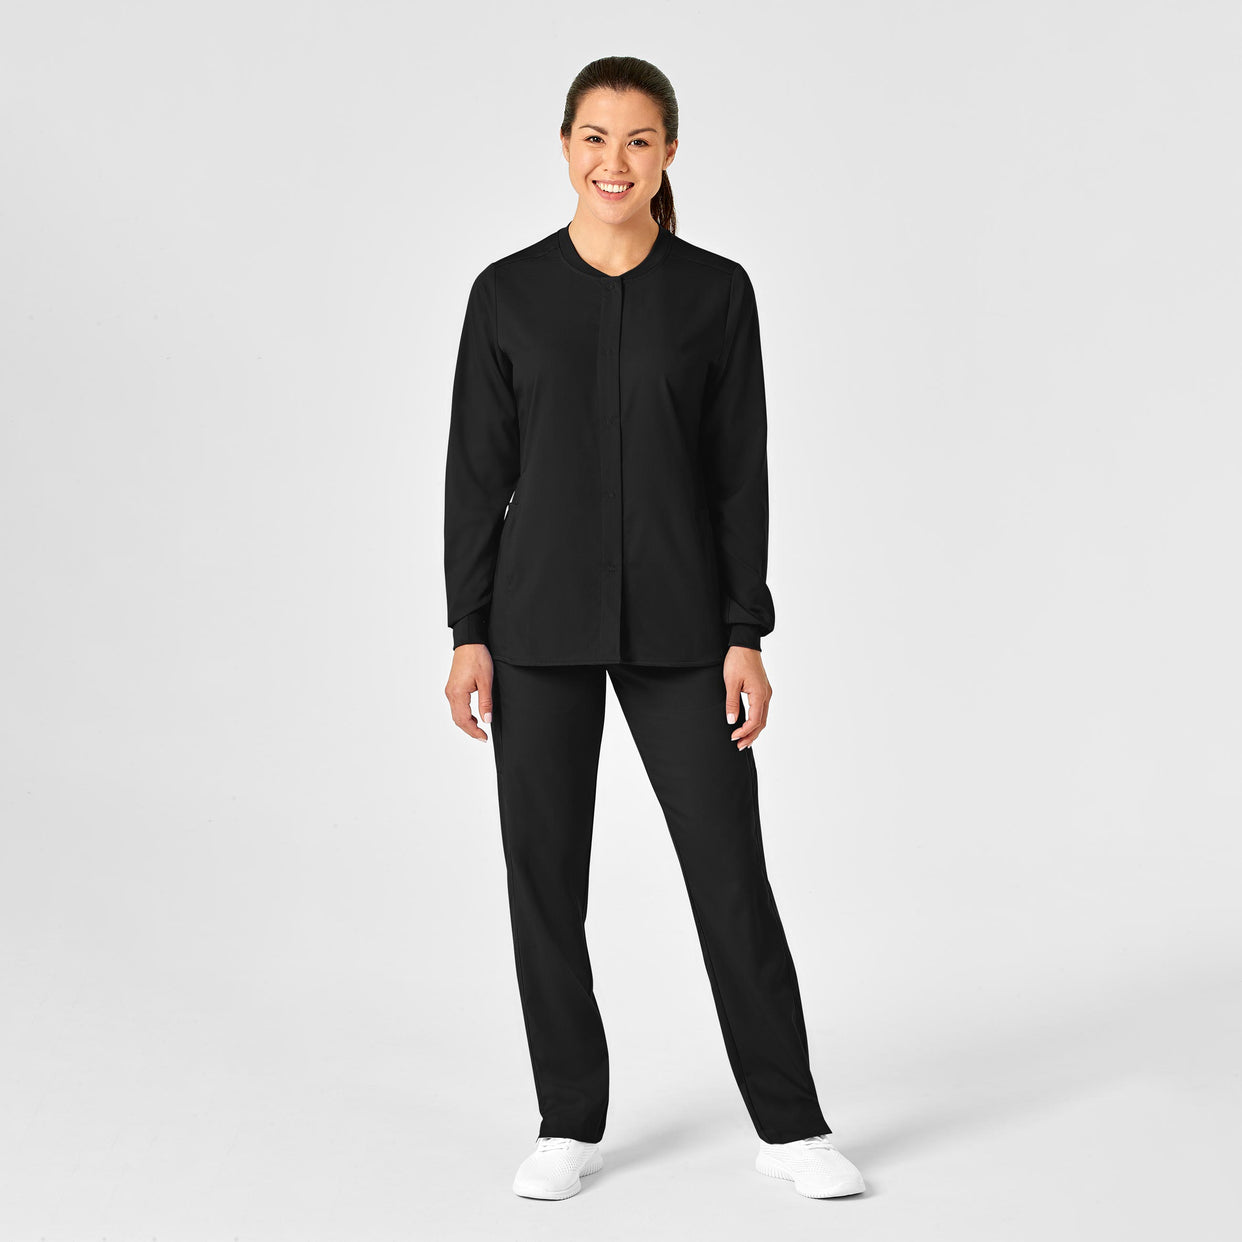 PRO Women's Snap Front Scrub Jacket - Black